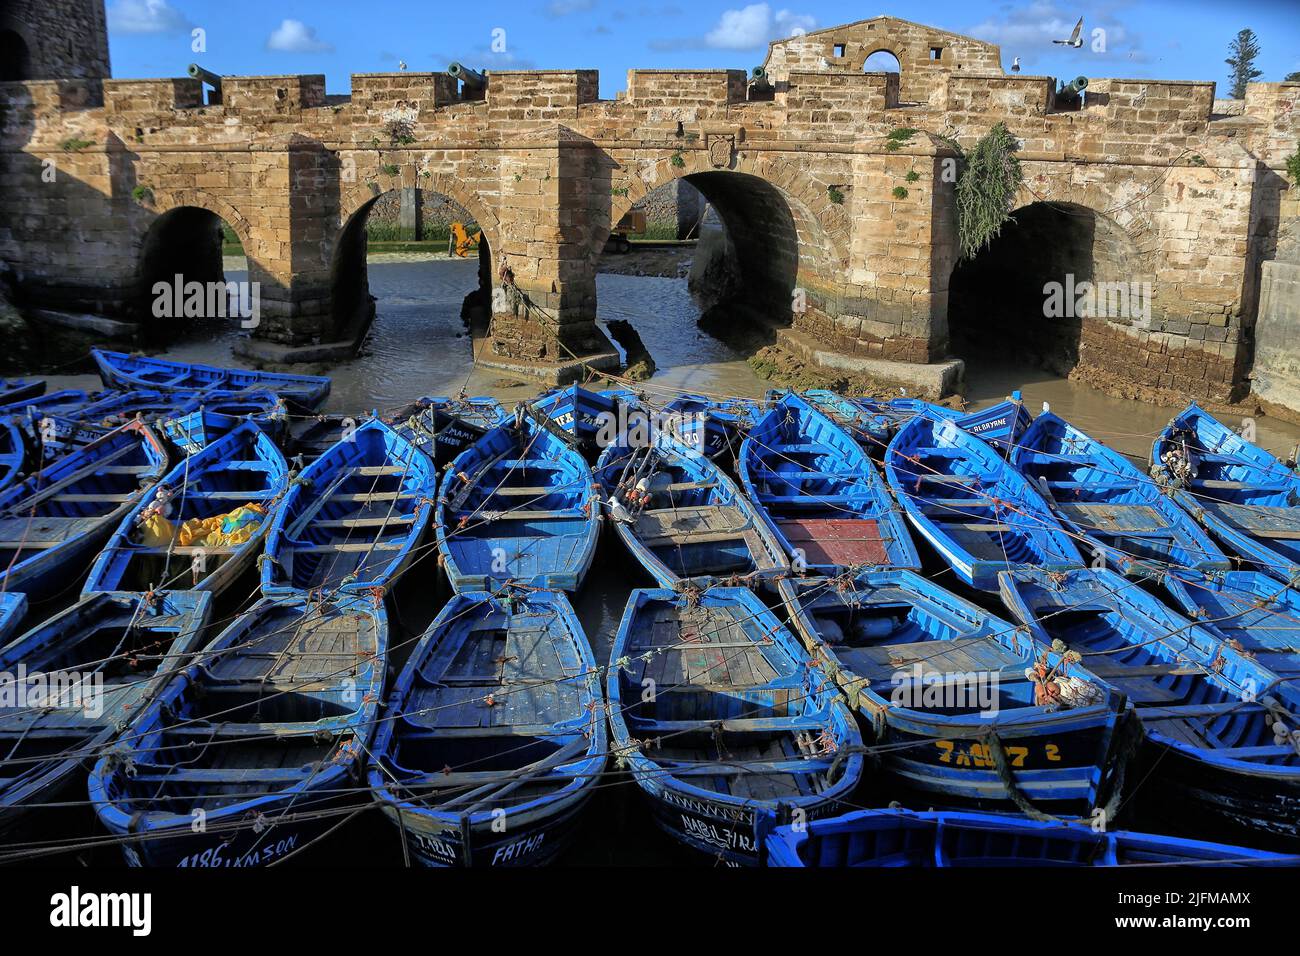 Marokko Essaouria Hafen- blaue Fischerboote vor der Festung 'Castelo Real de Mogador' Banque D'Images